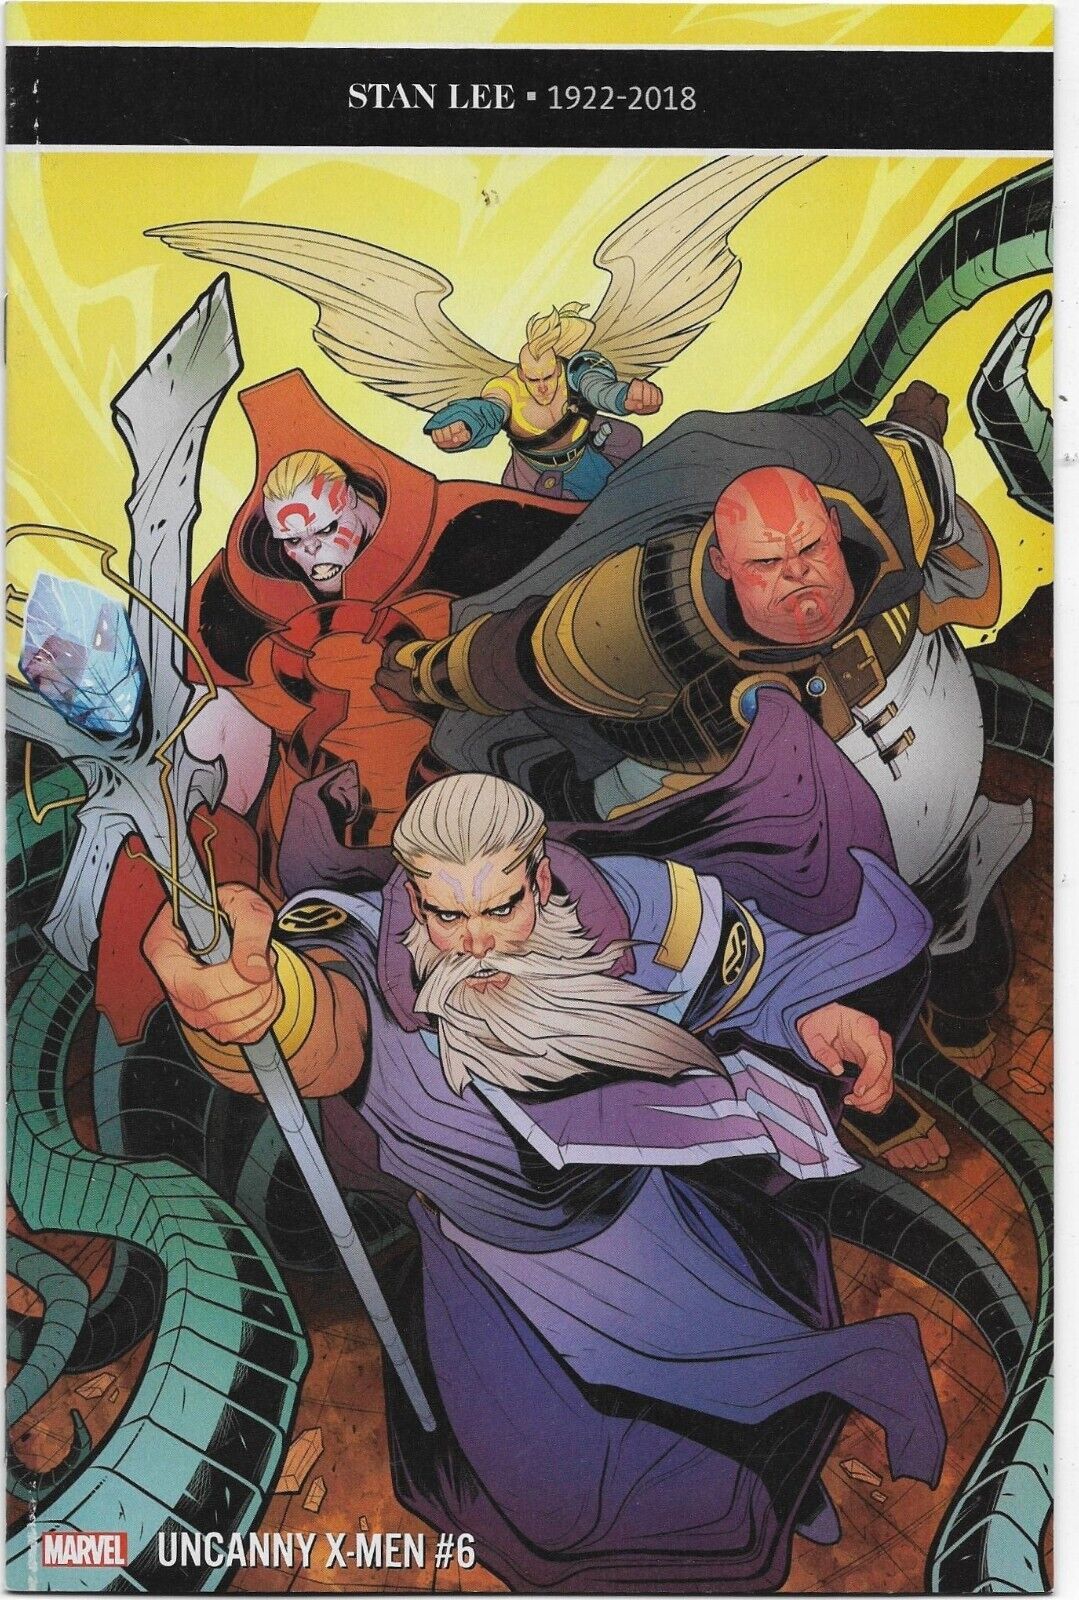 Uncanny X-Men (Fifth ) #6 - VF/NM - Stan Lee Memorial Cover